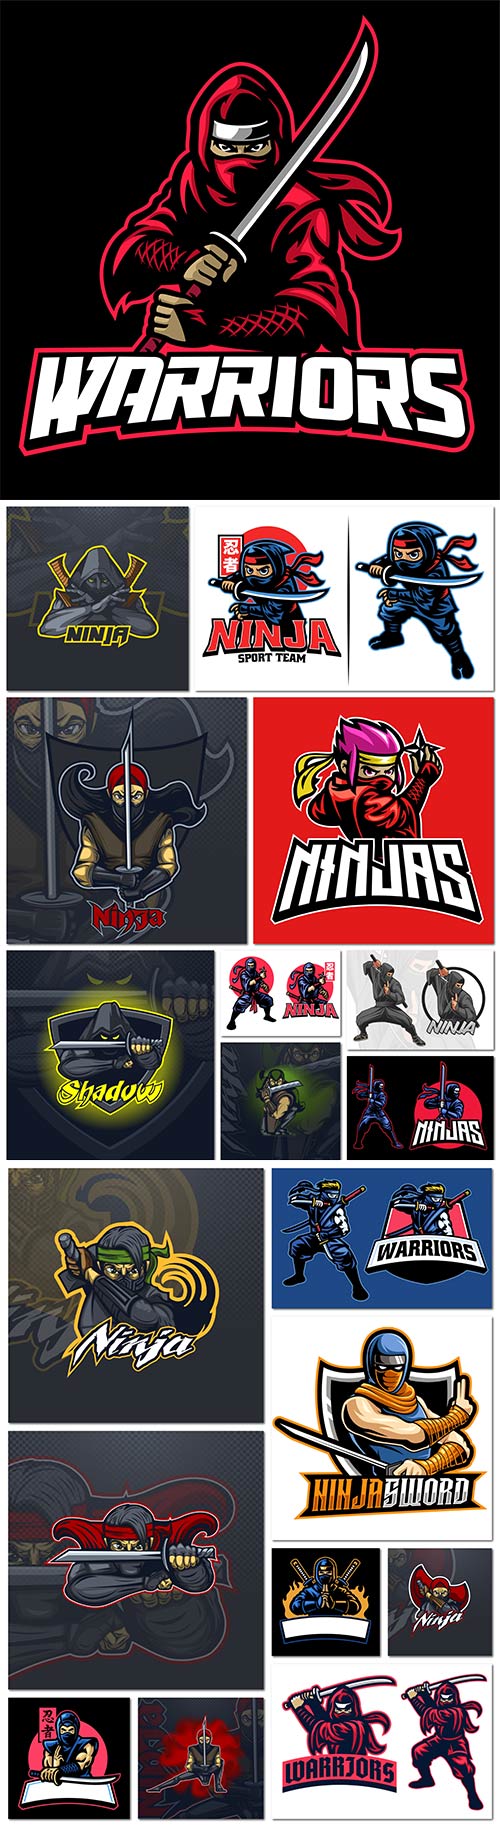 Ninja character design for logo and illustration premium vector